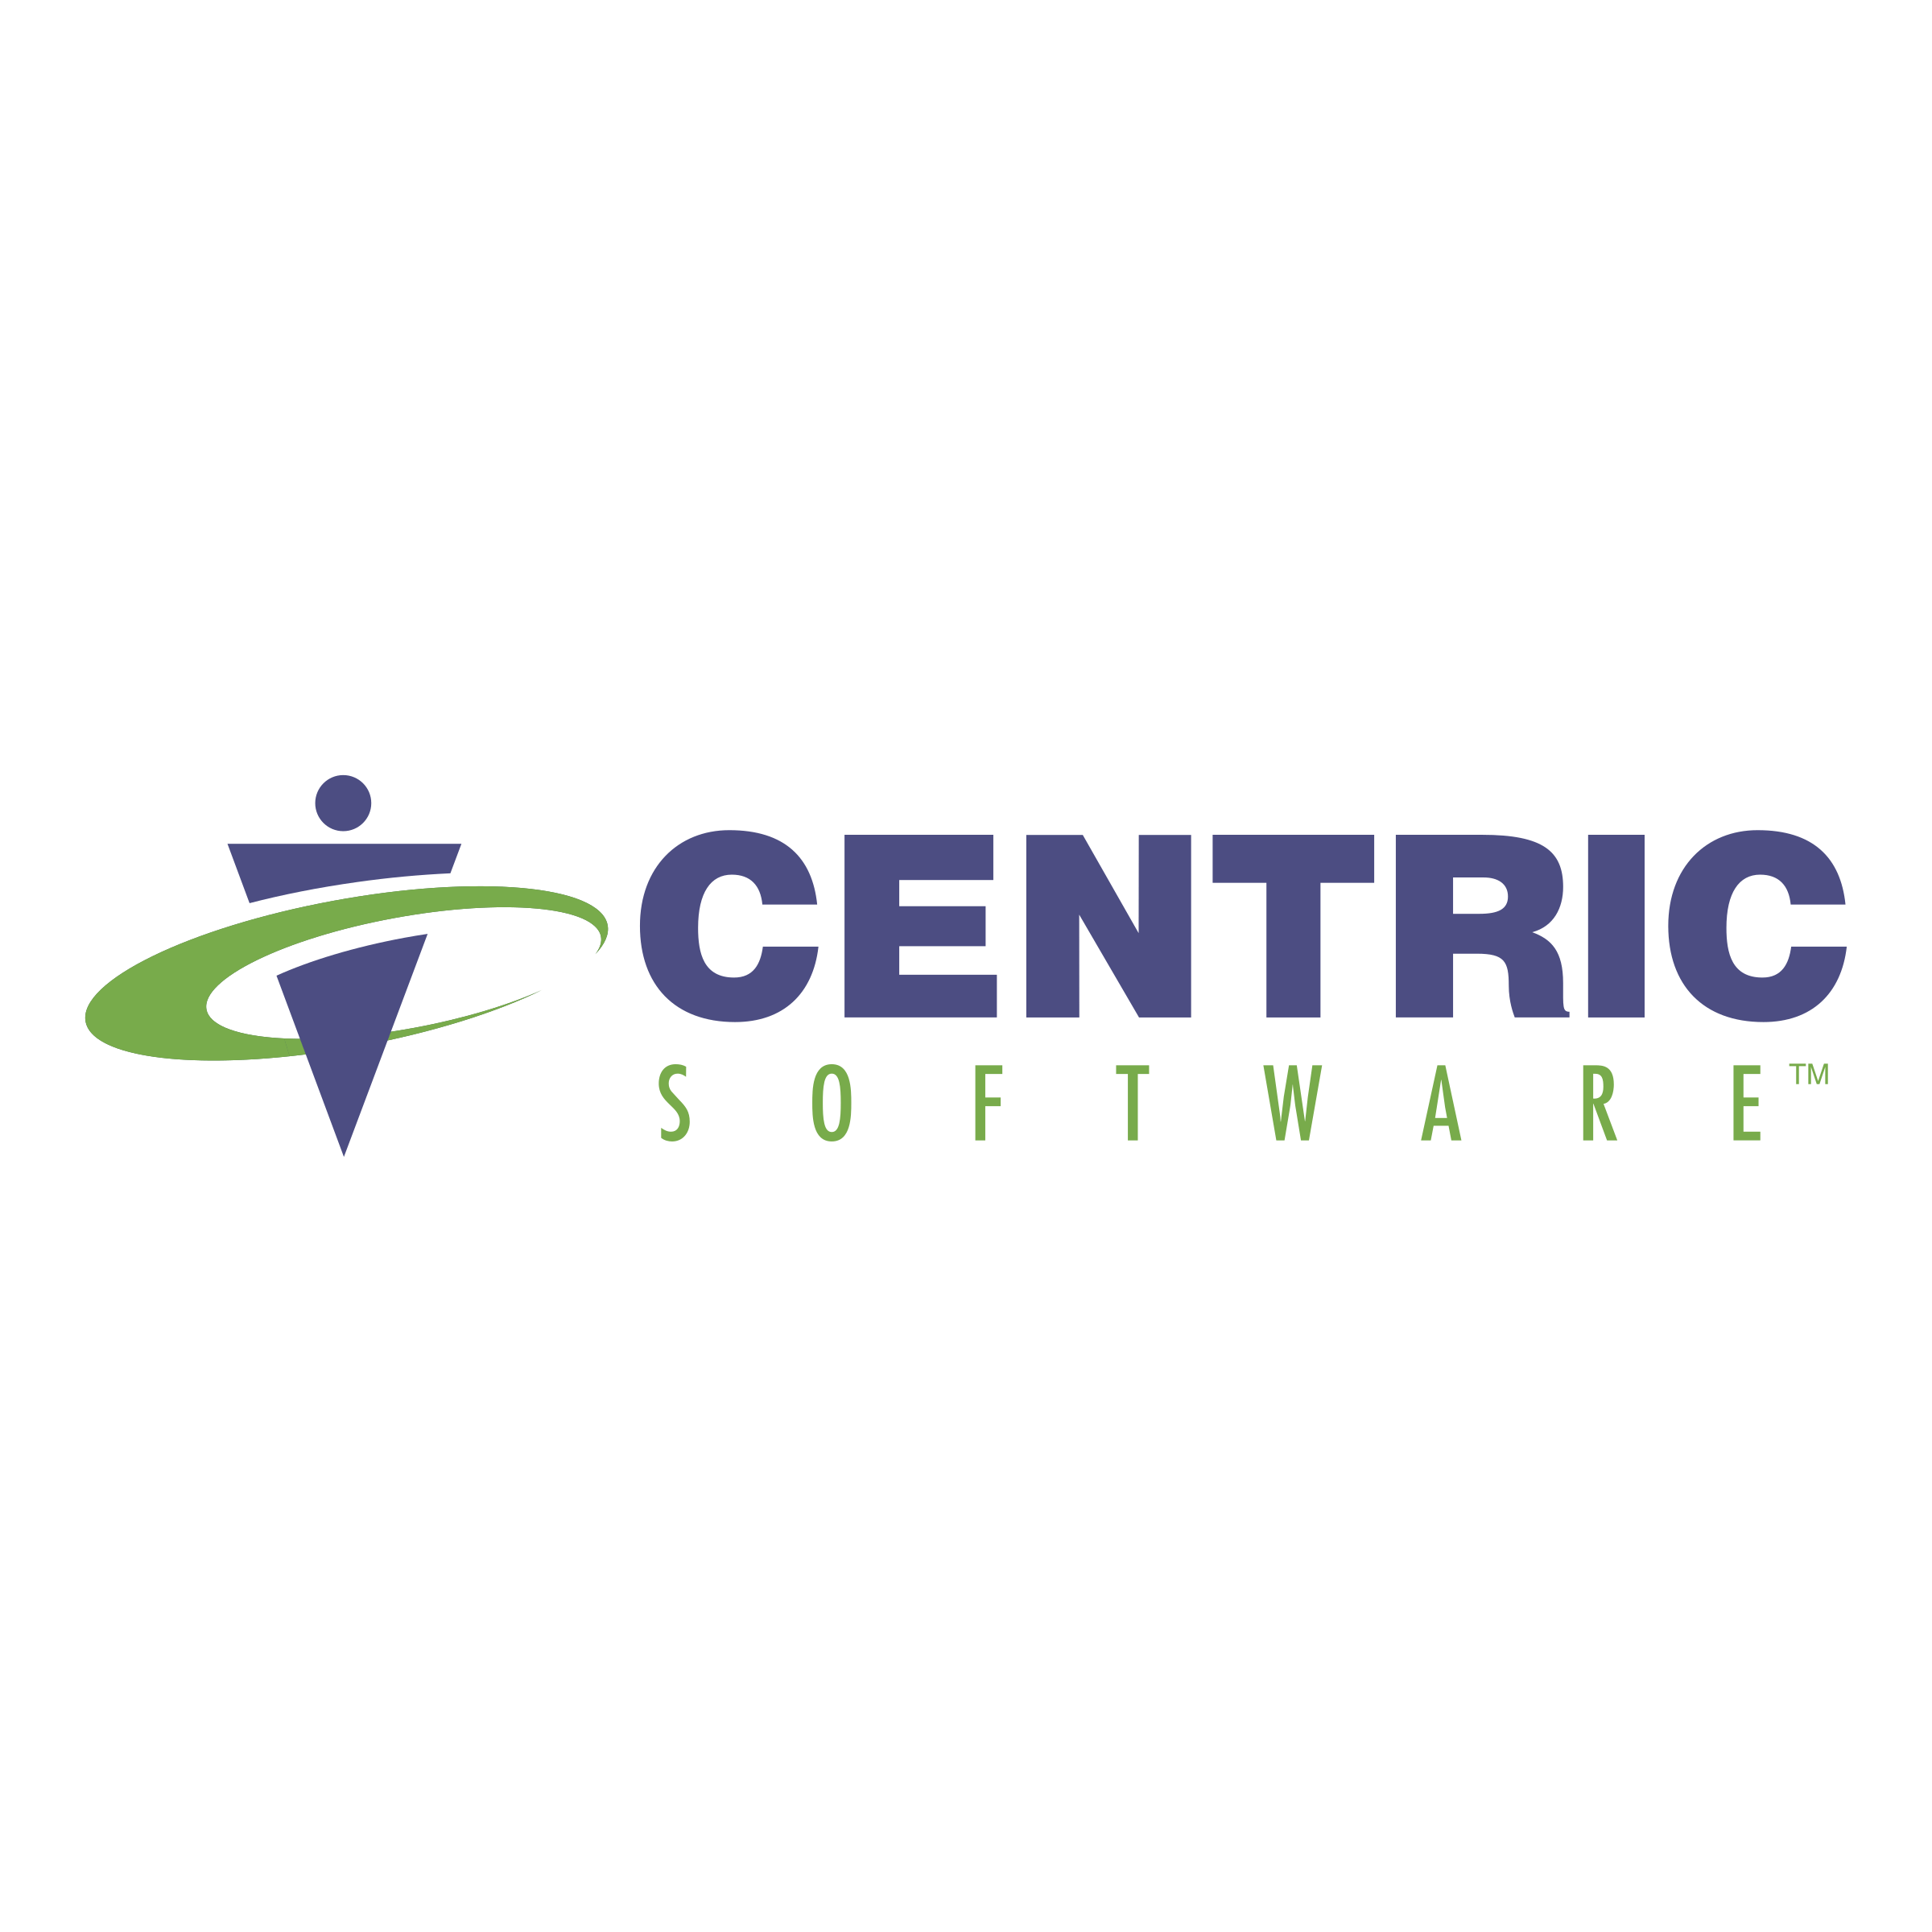 Centric Logo - Centric Software Logo PNG Transparent & SVG Vector